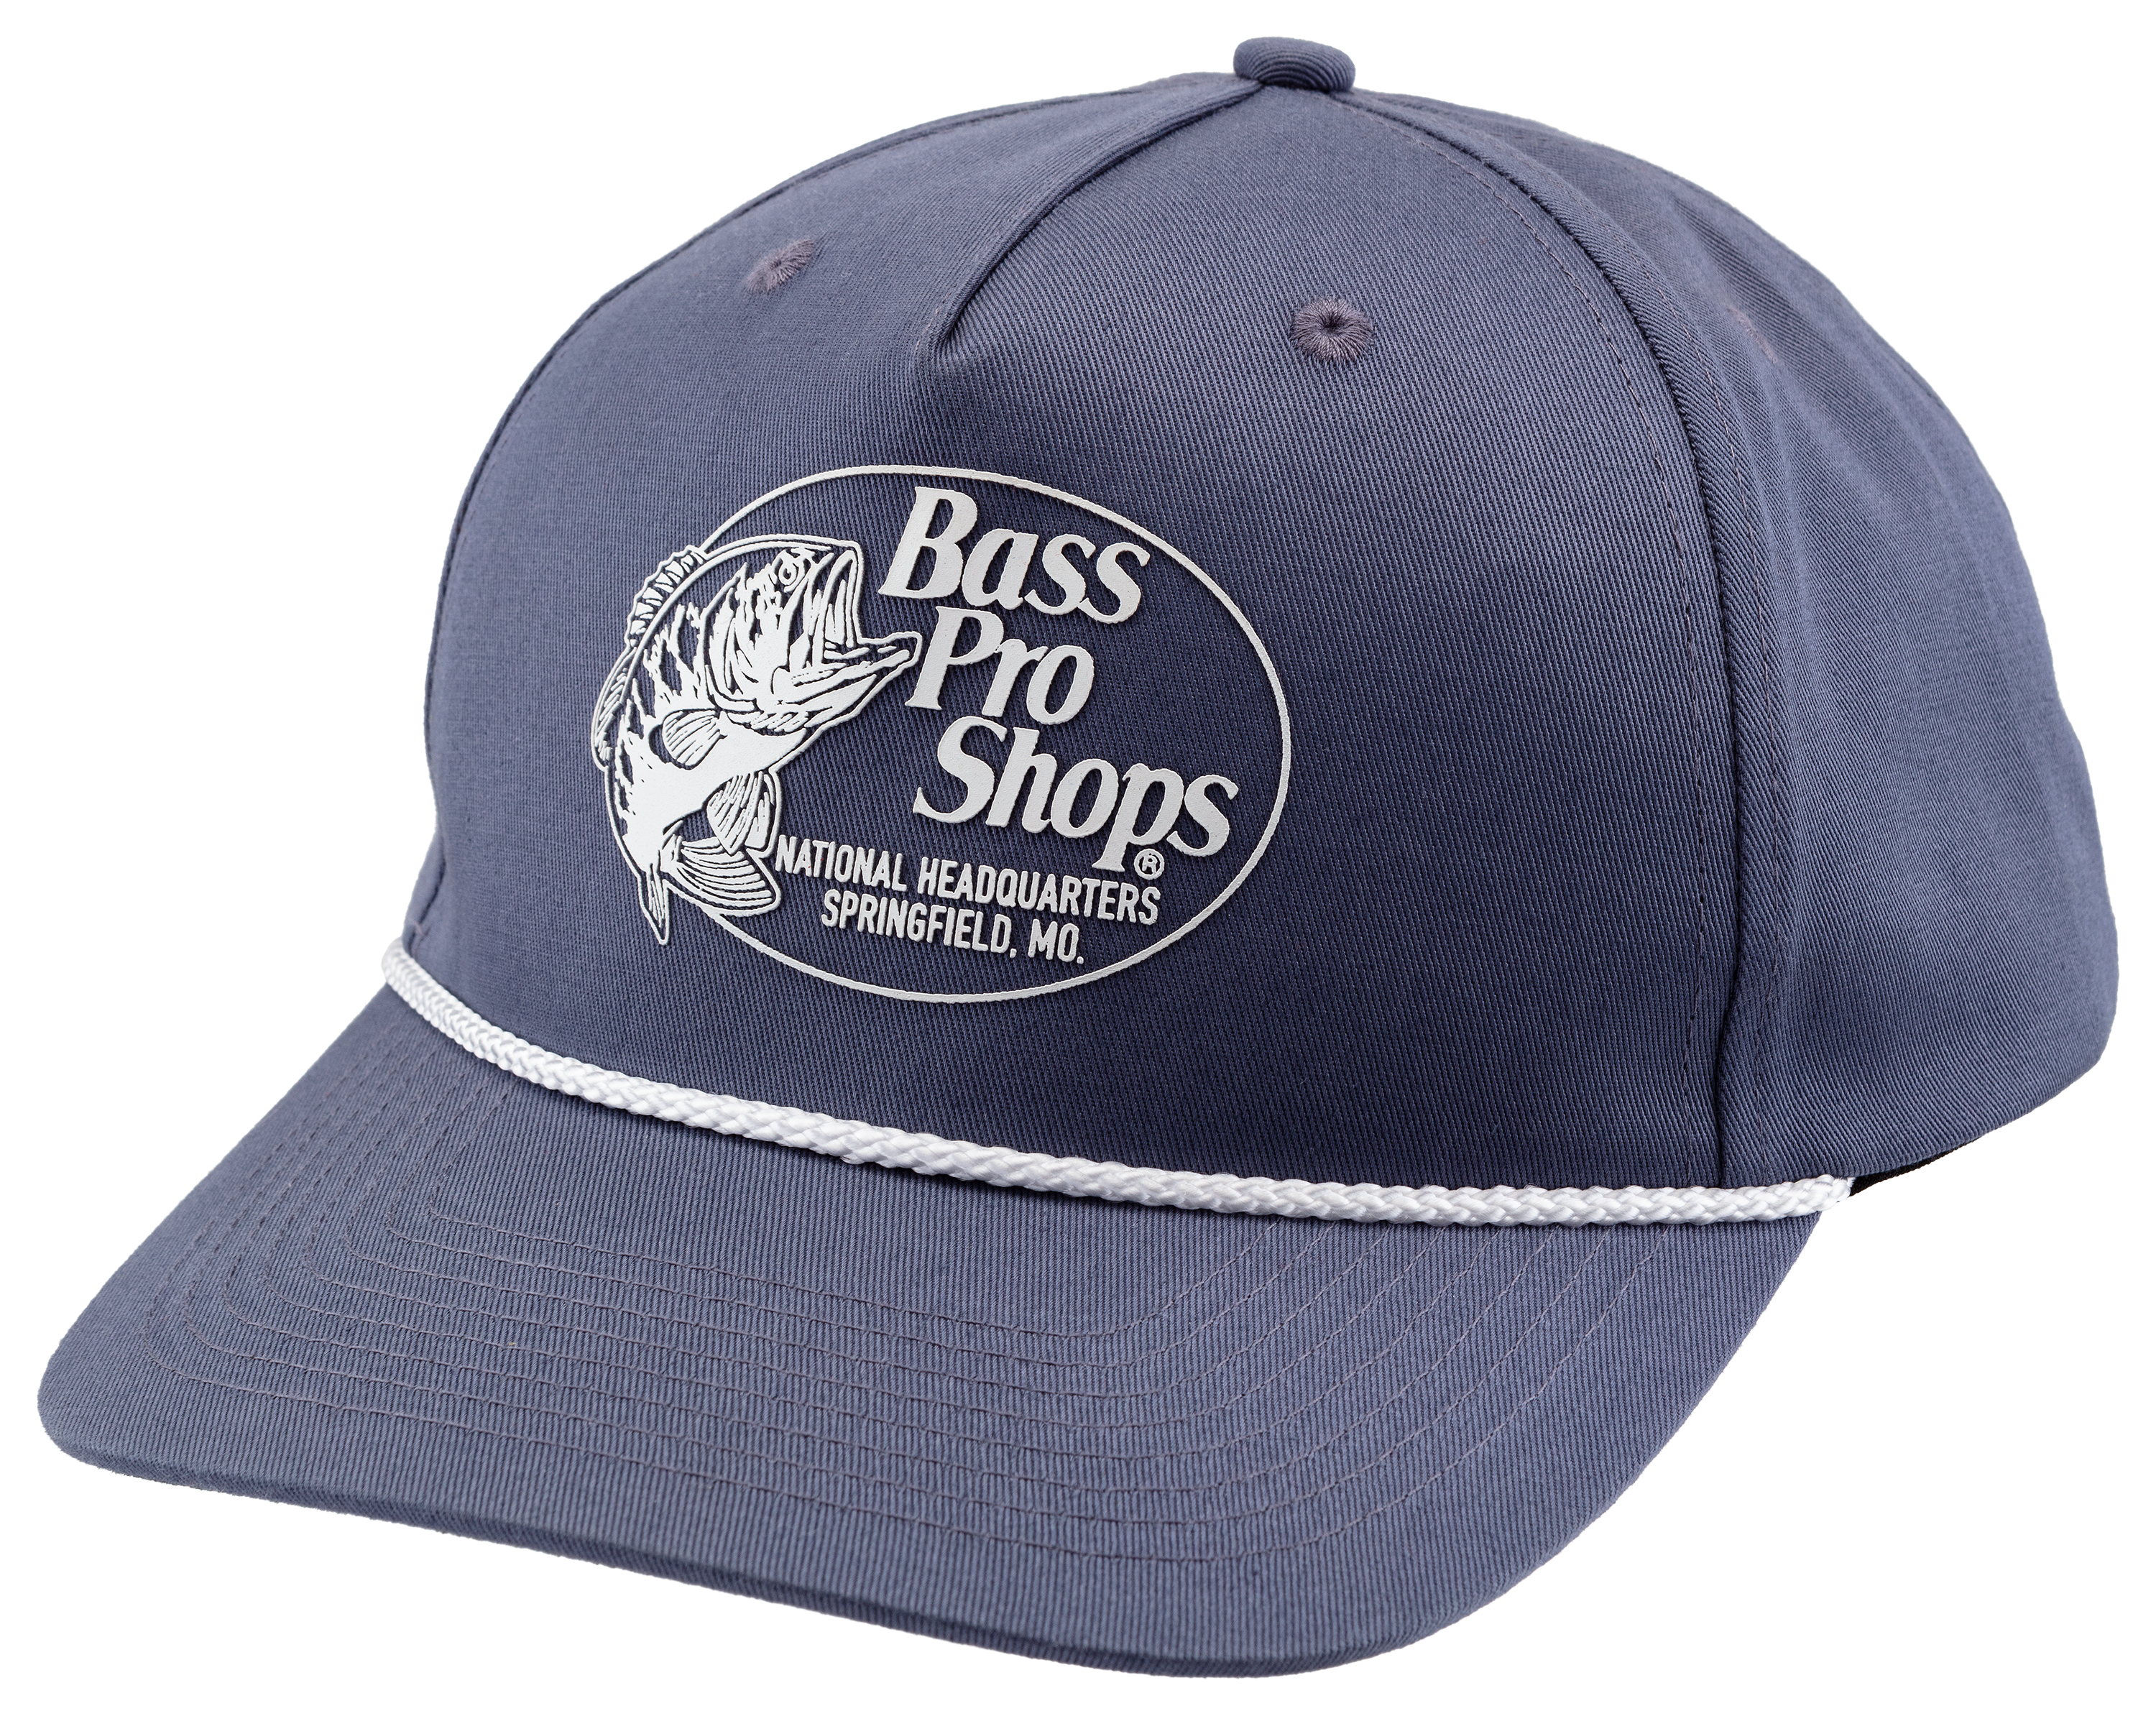 Bass Pro Shops Original Logo Throwback Cap